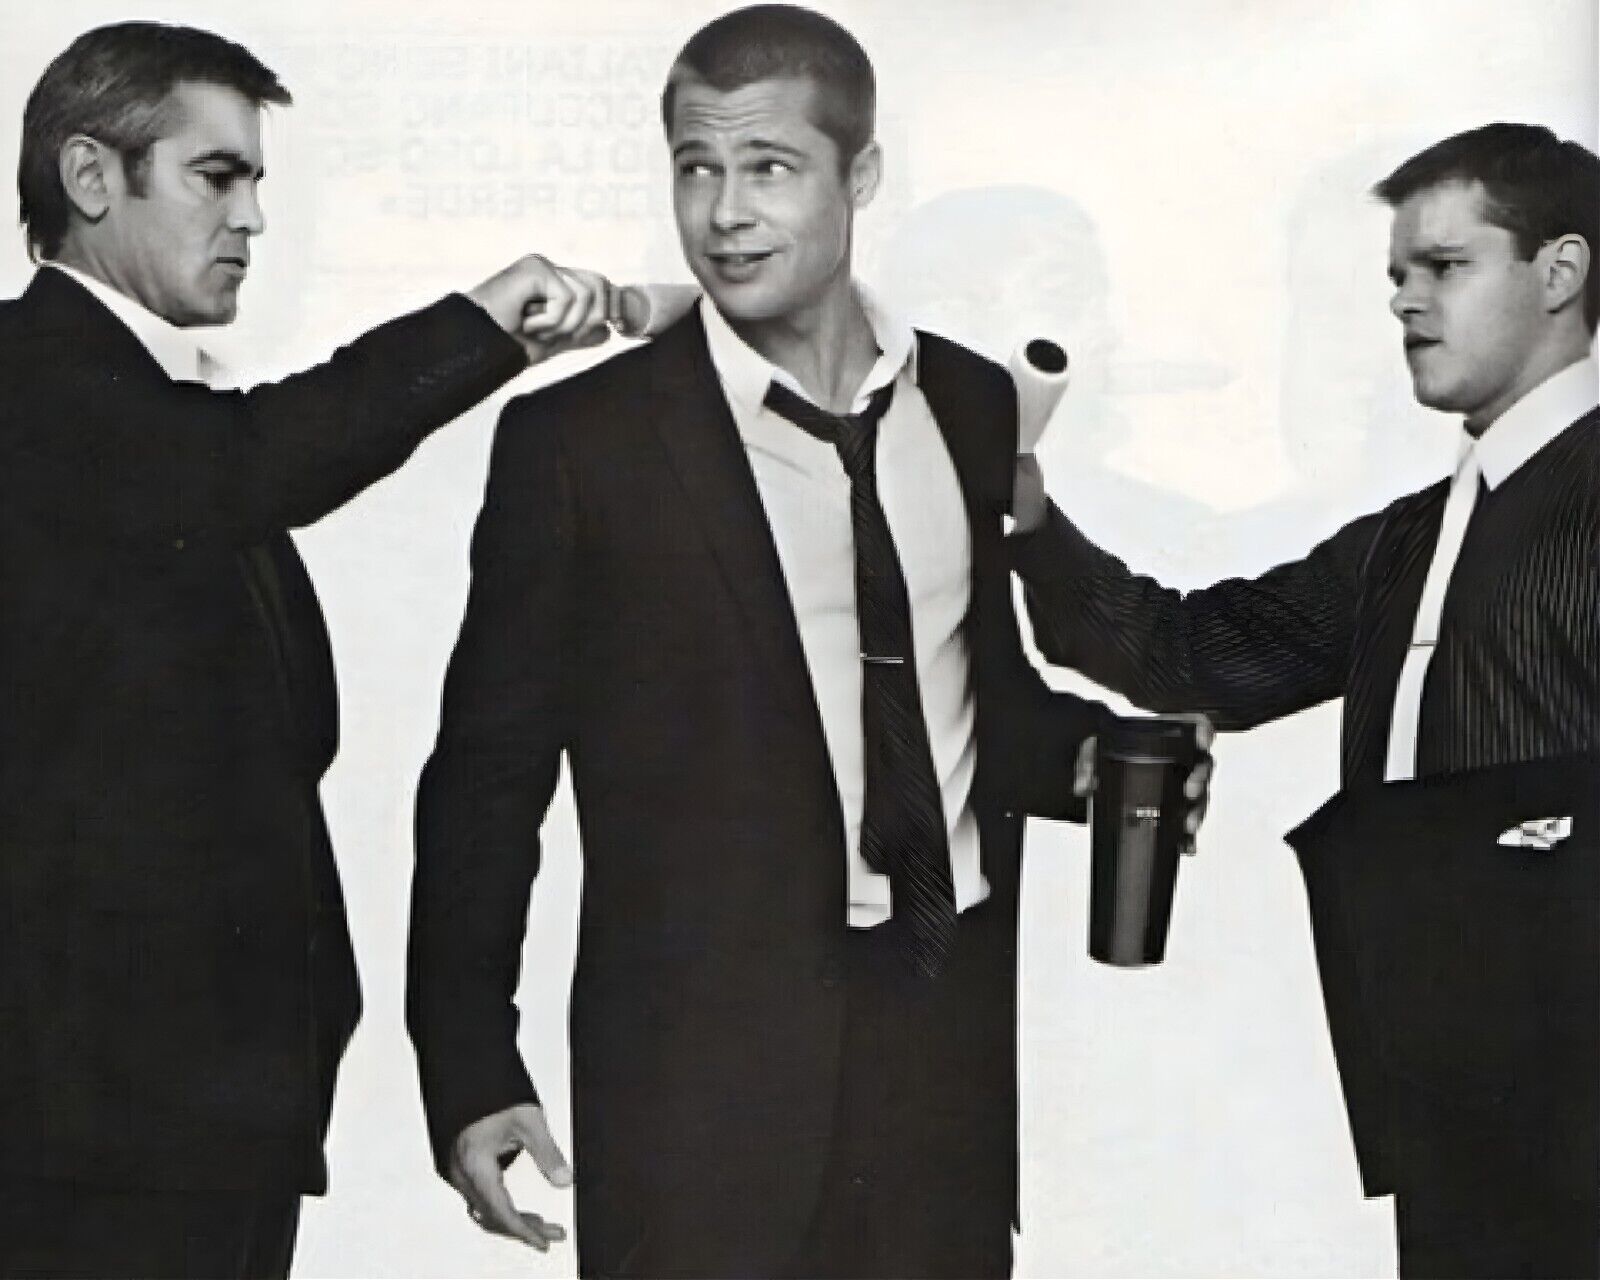 Brad Pitt & George Clooney & Matt Damon 8 x 10 Photograph Print Photo Ocean's 11